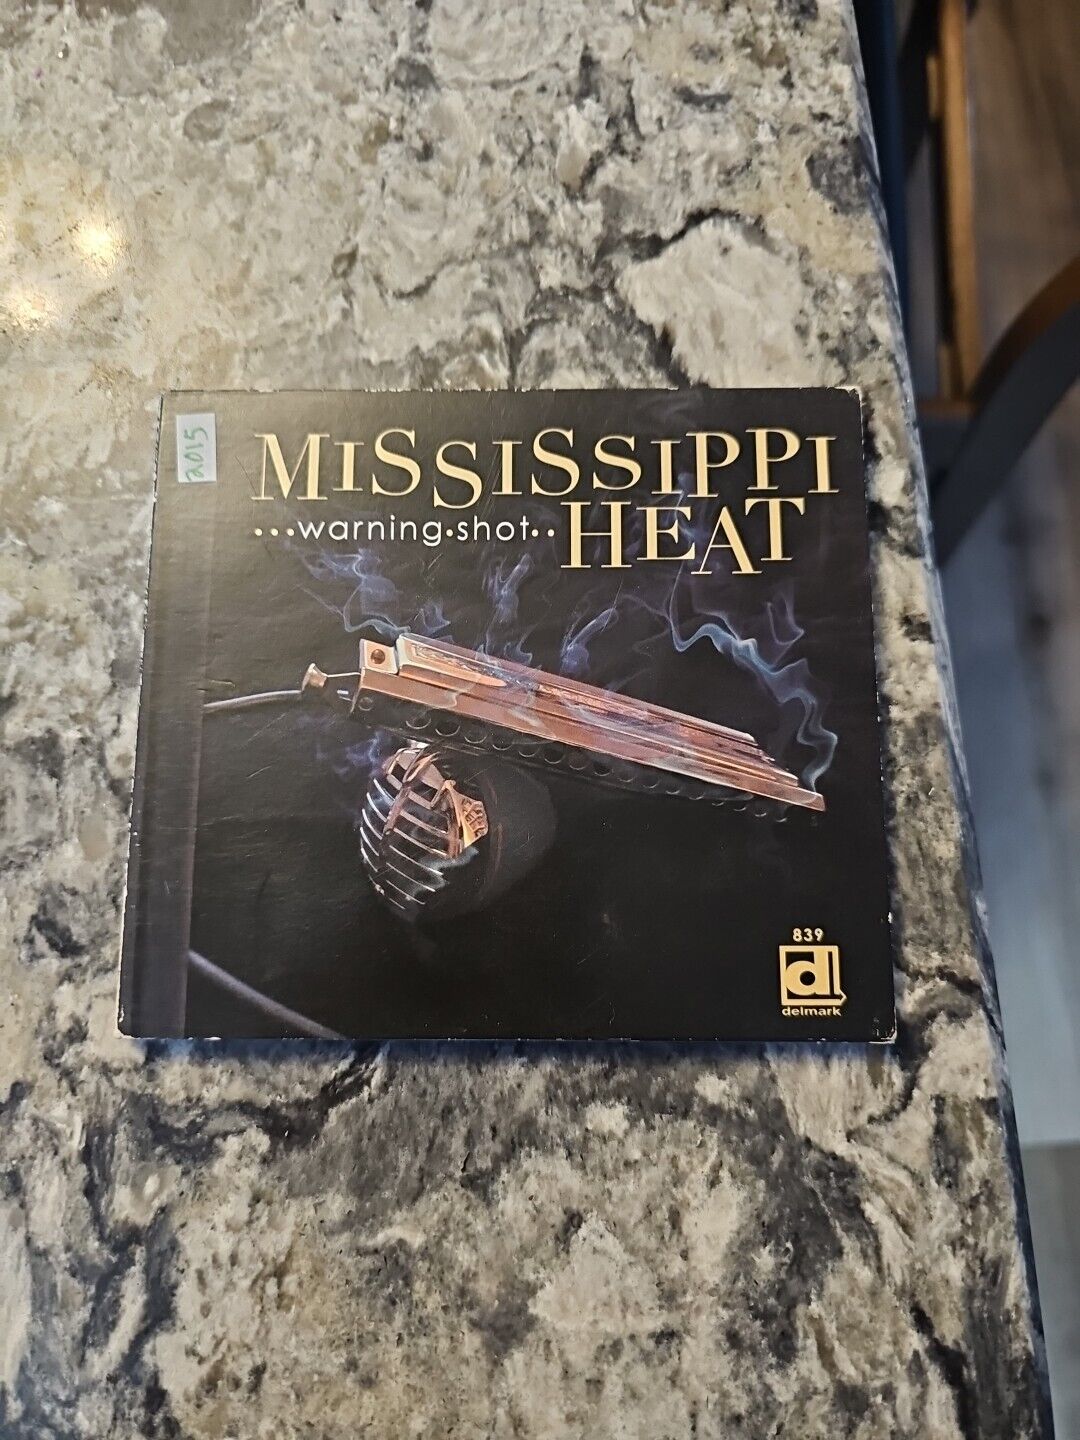 Mississippi Heat - Warning Shot - CD